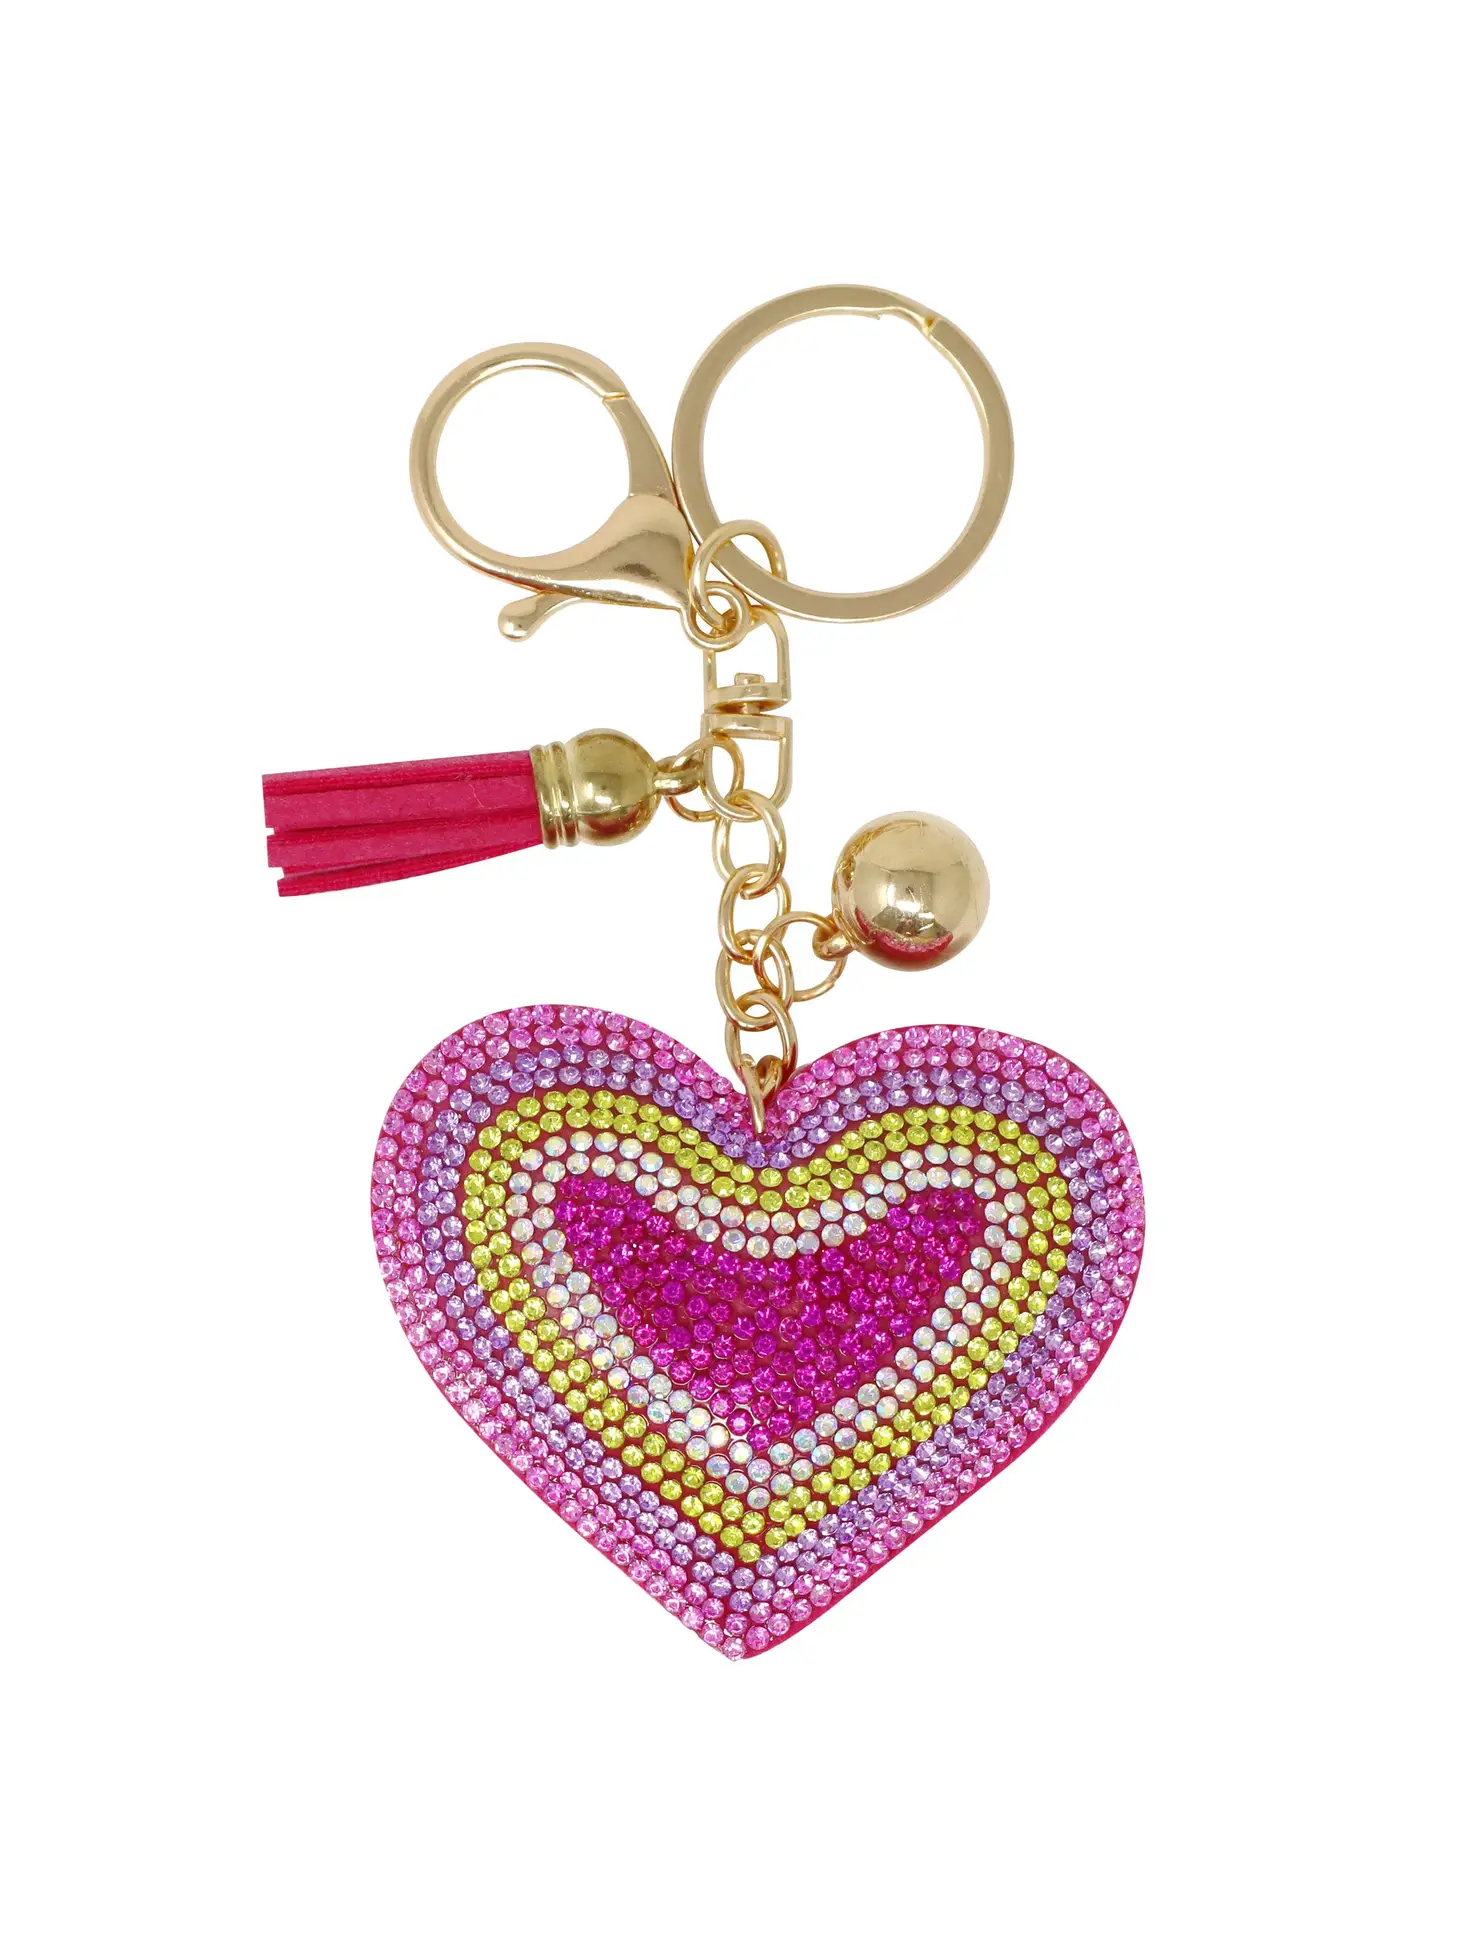 Rainbow Heart Jeweled Bag Charm